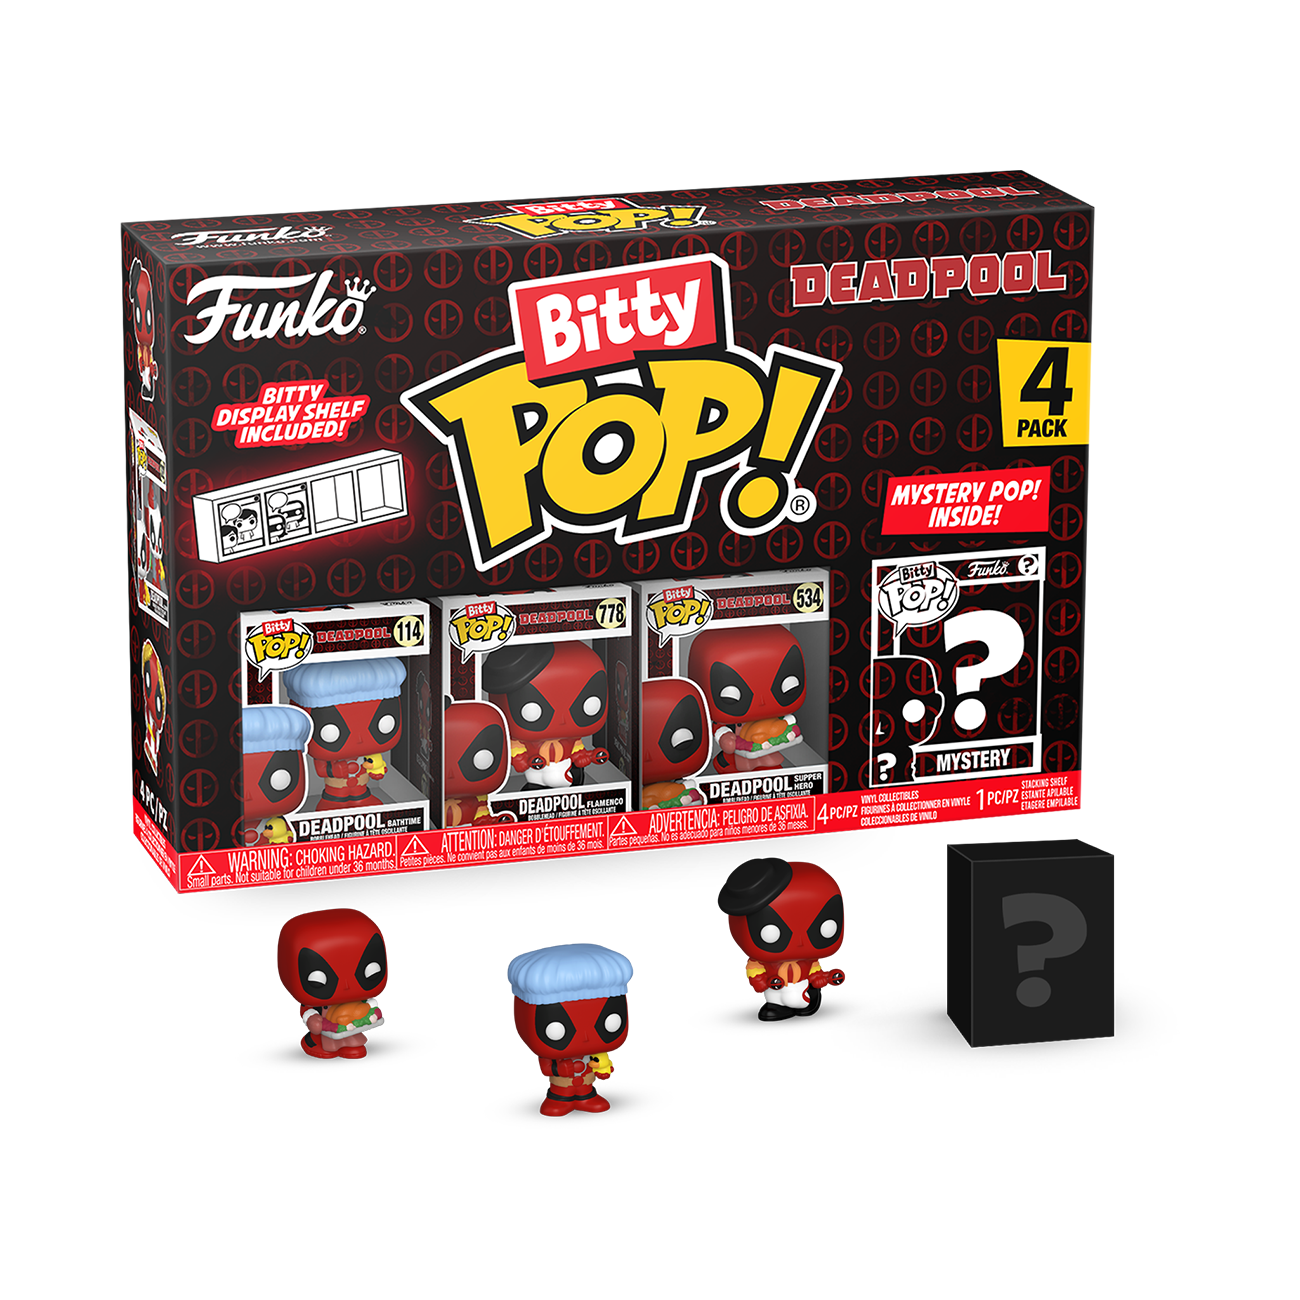 Funko Bitty Pop! Deadpool 4-Pack Series 2